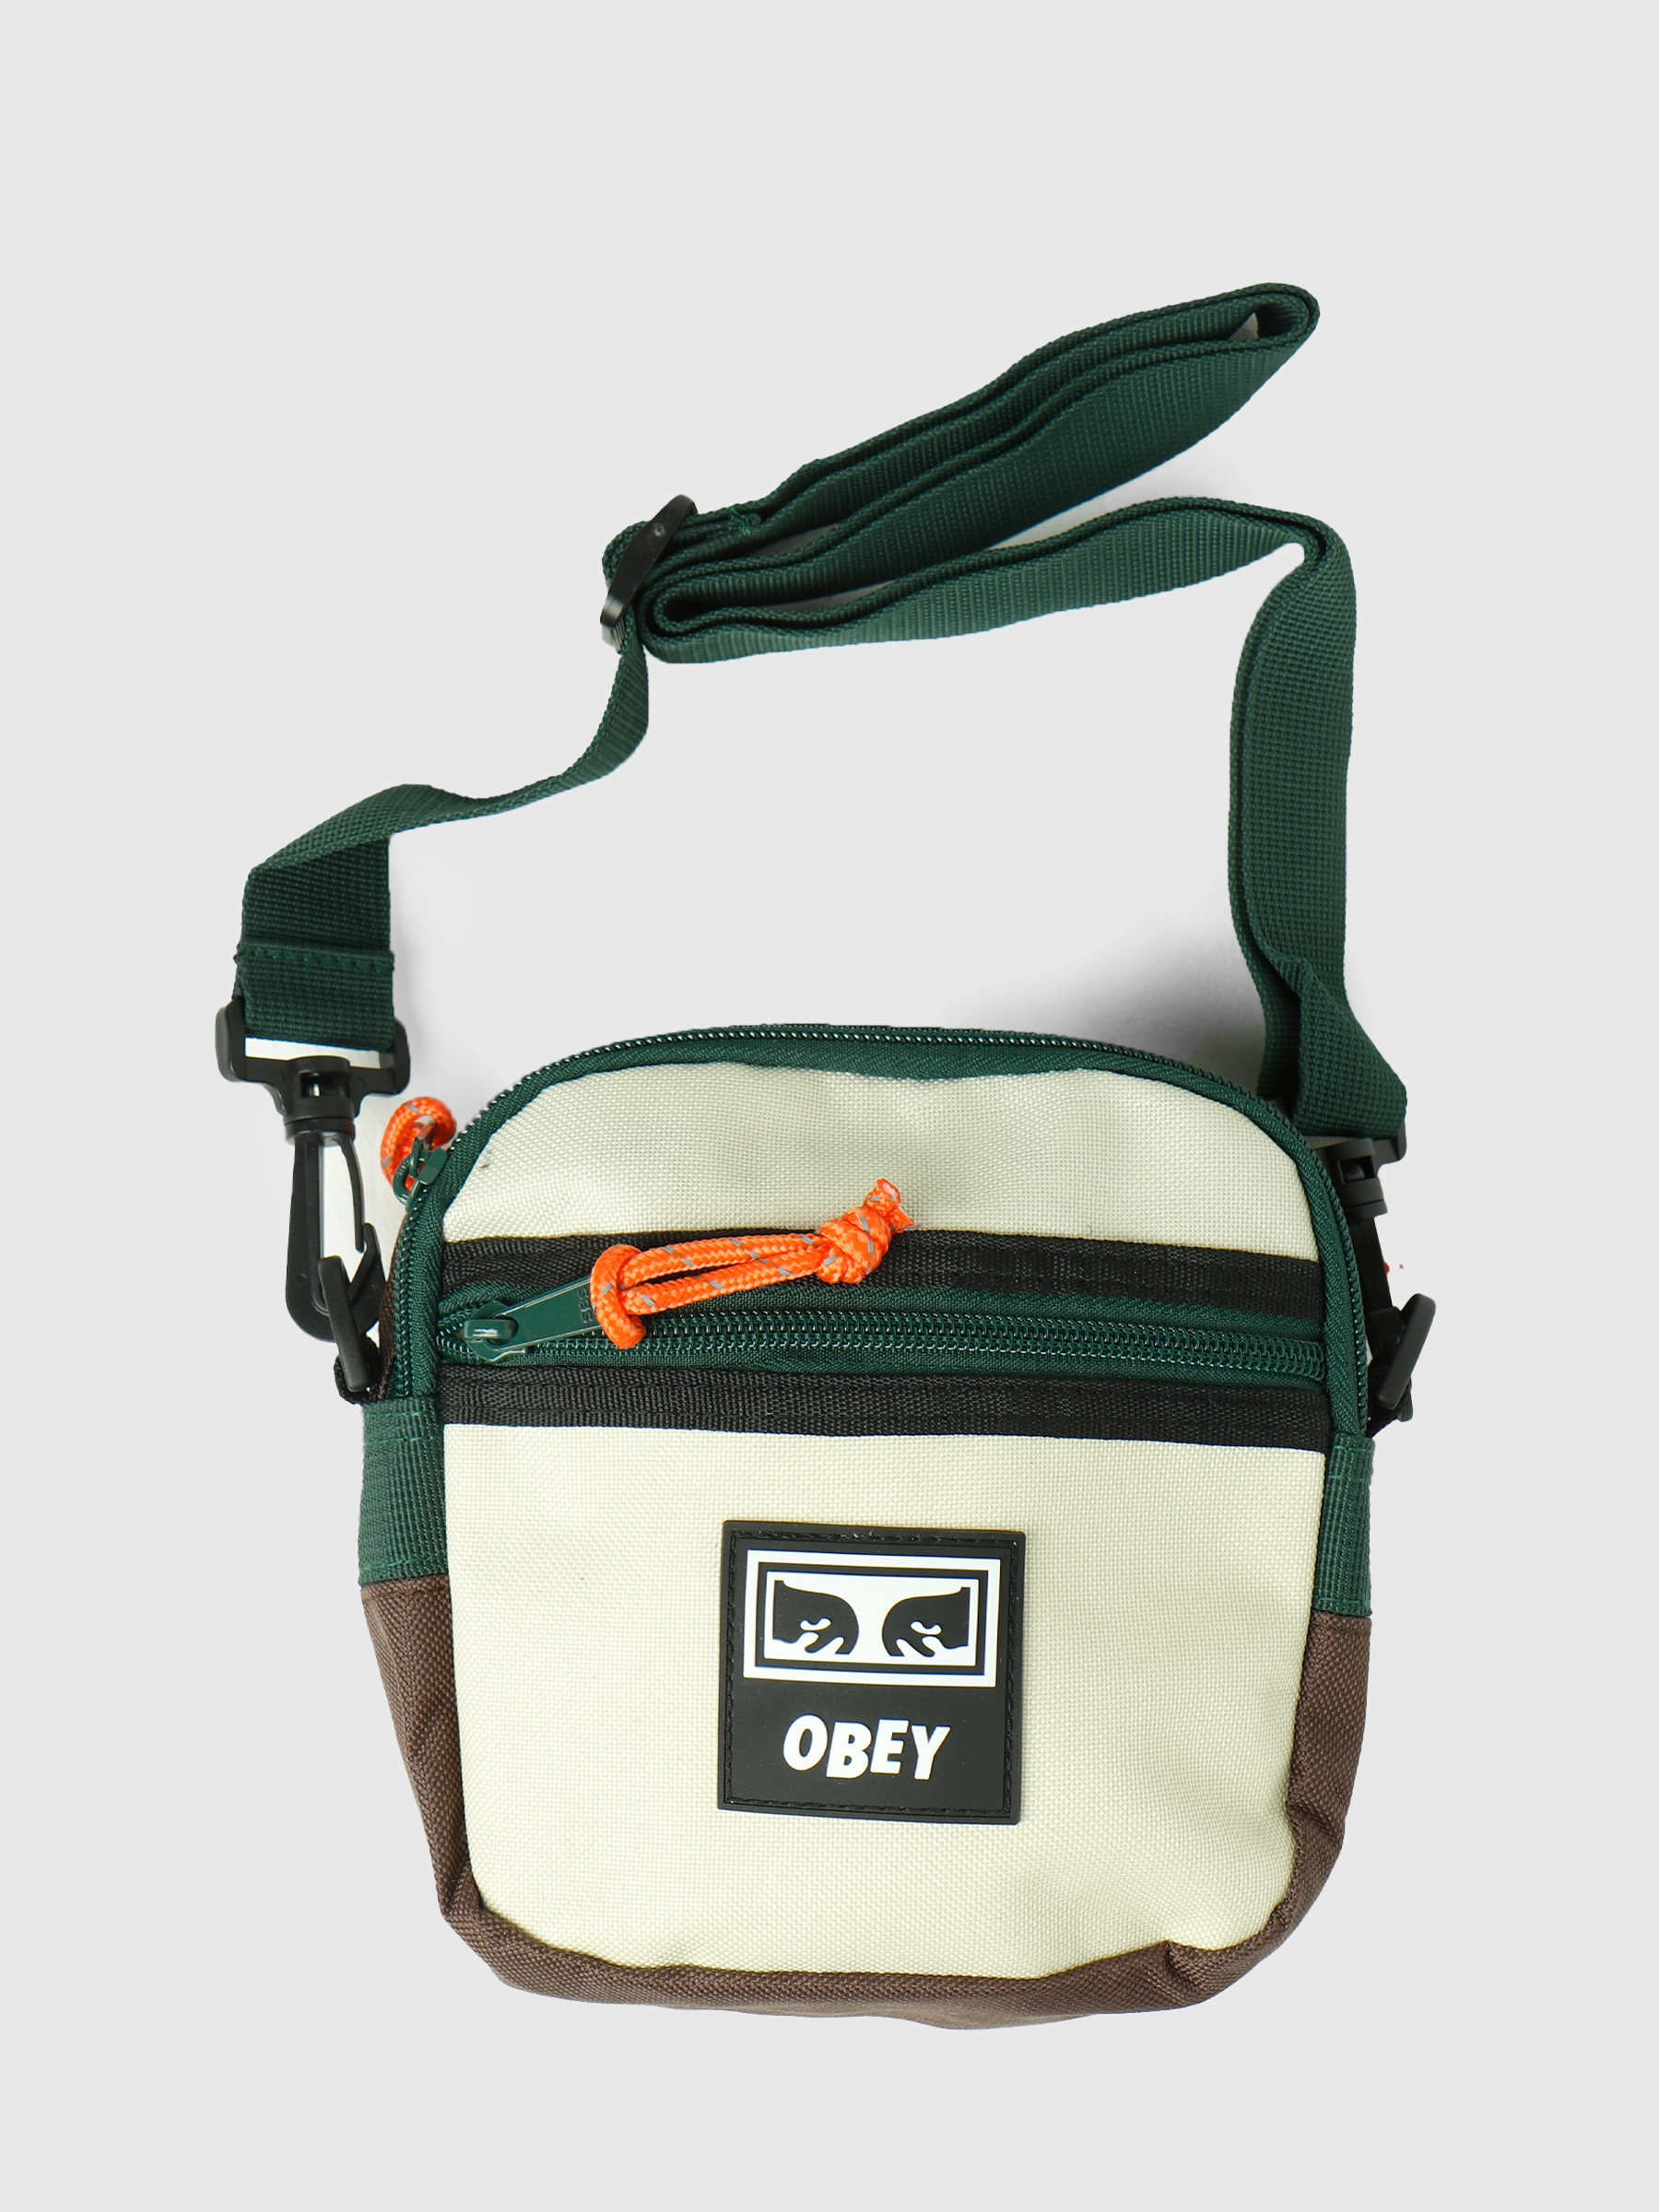 Obey Conditions Traveler Bag Iii Khaki Multi 